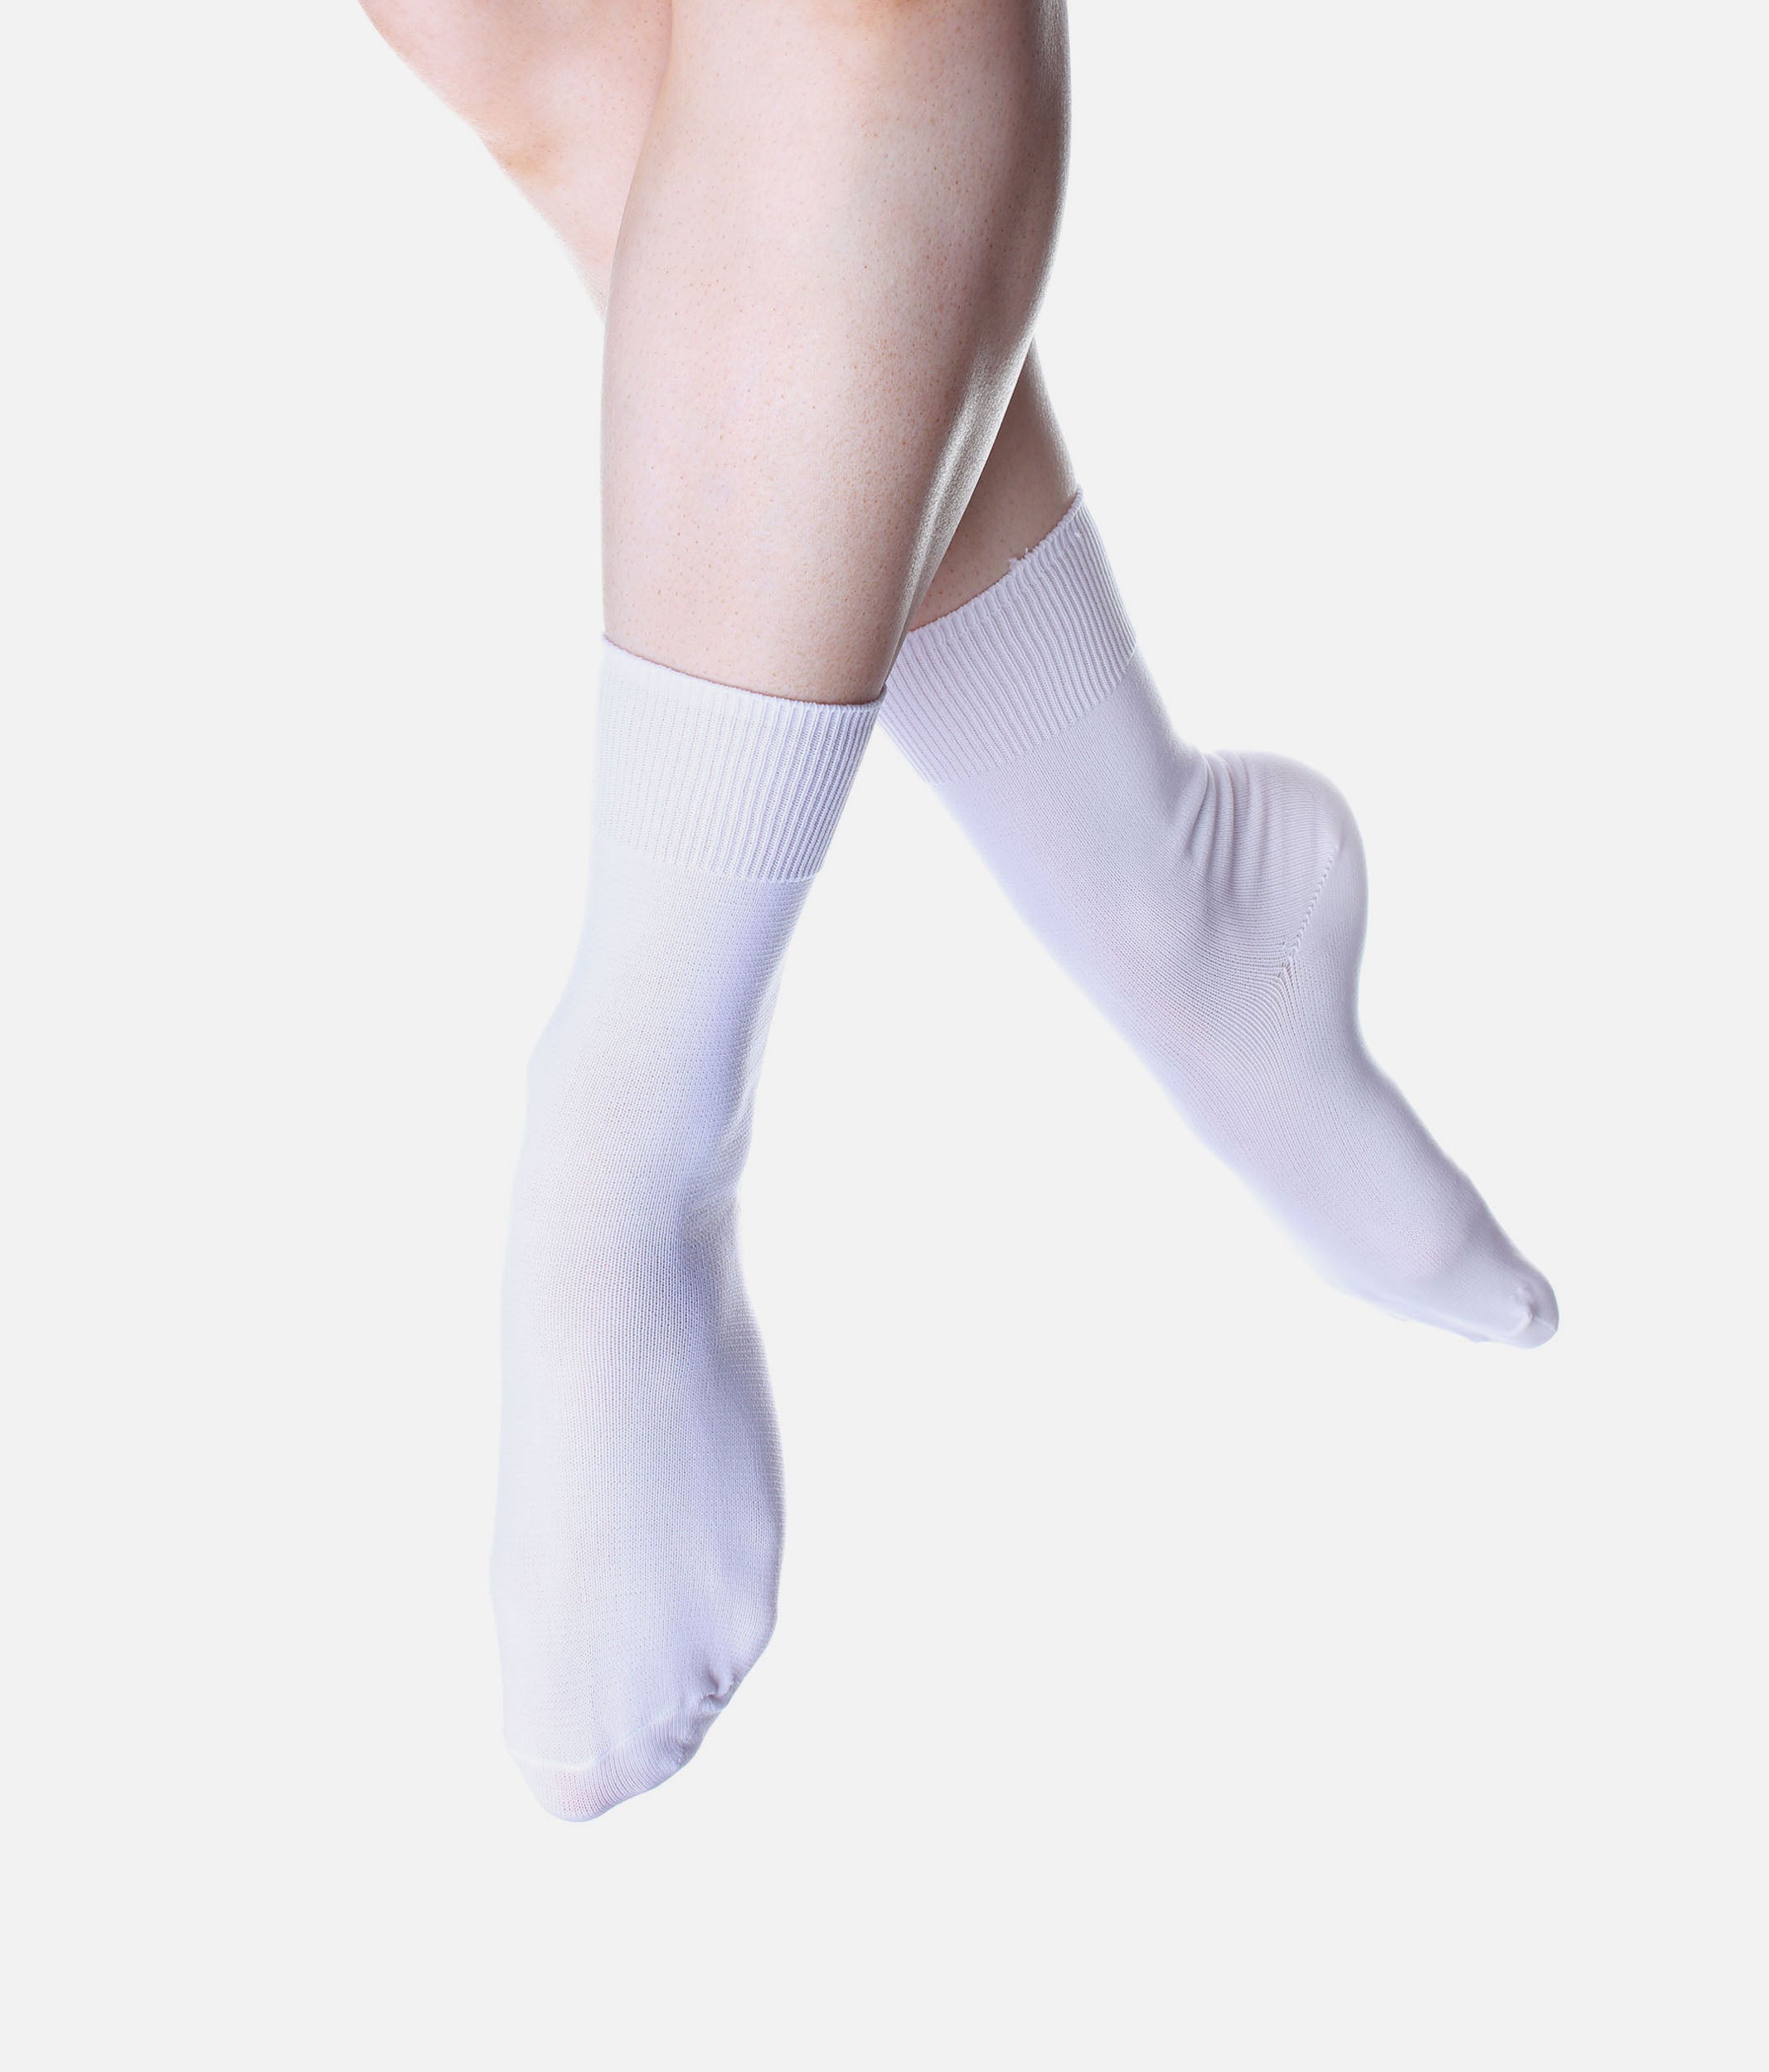 Sock Glue for Irish Dance Poodle Socks - Antonio Pacelli, Sock